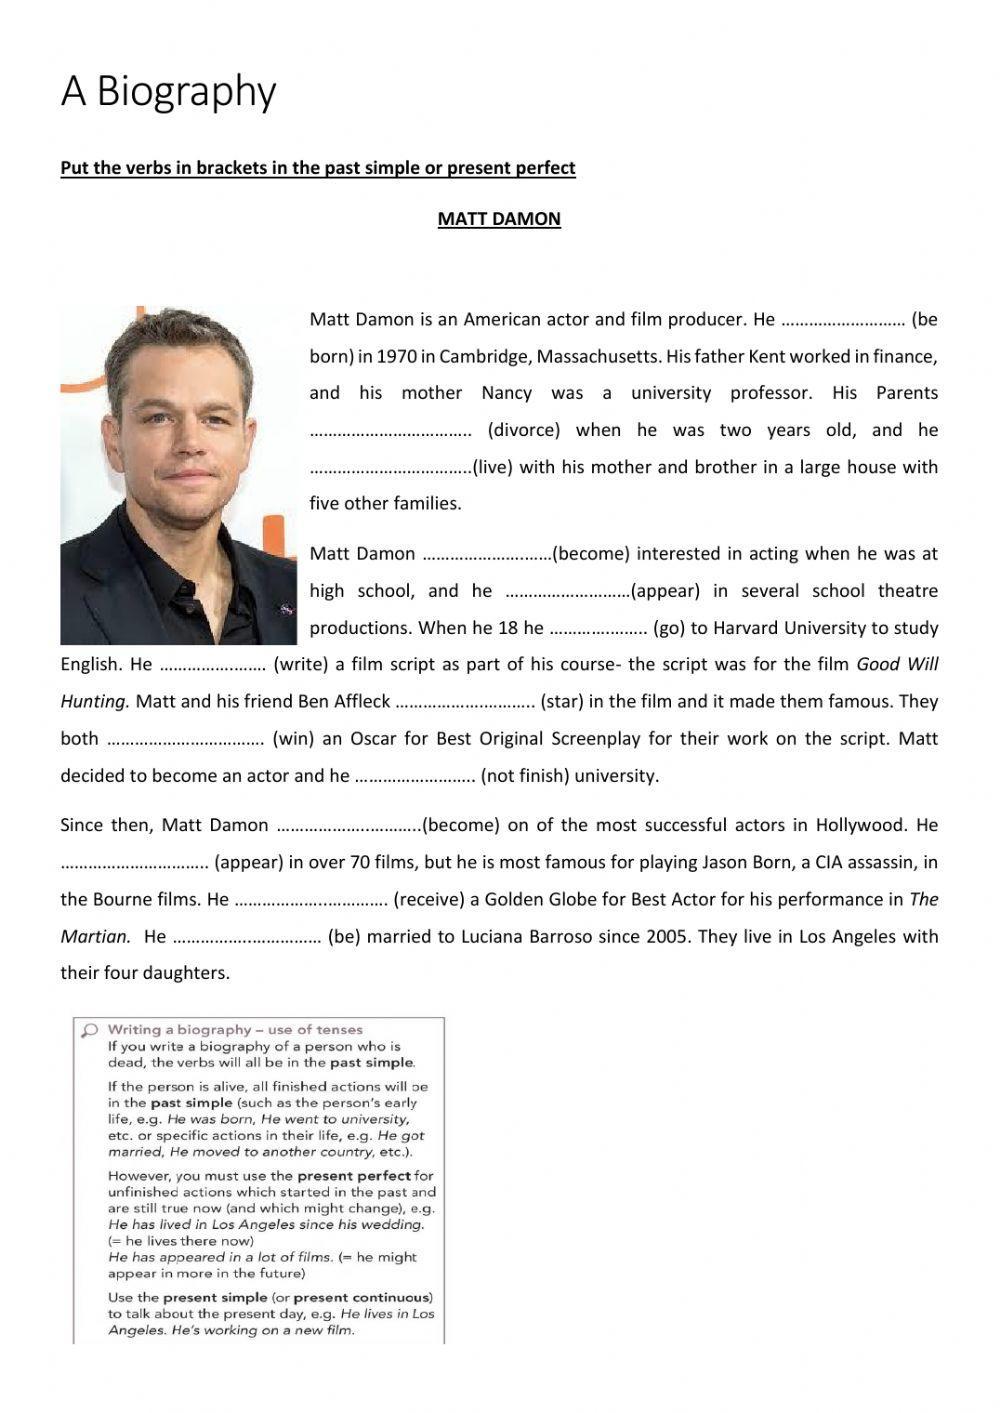 Matt Damon's Biography